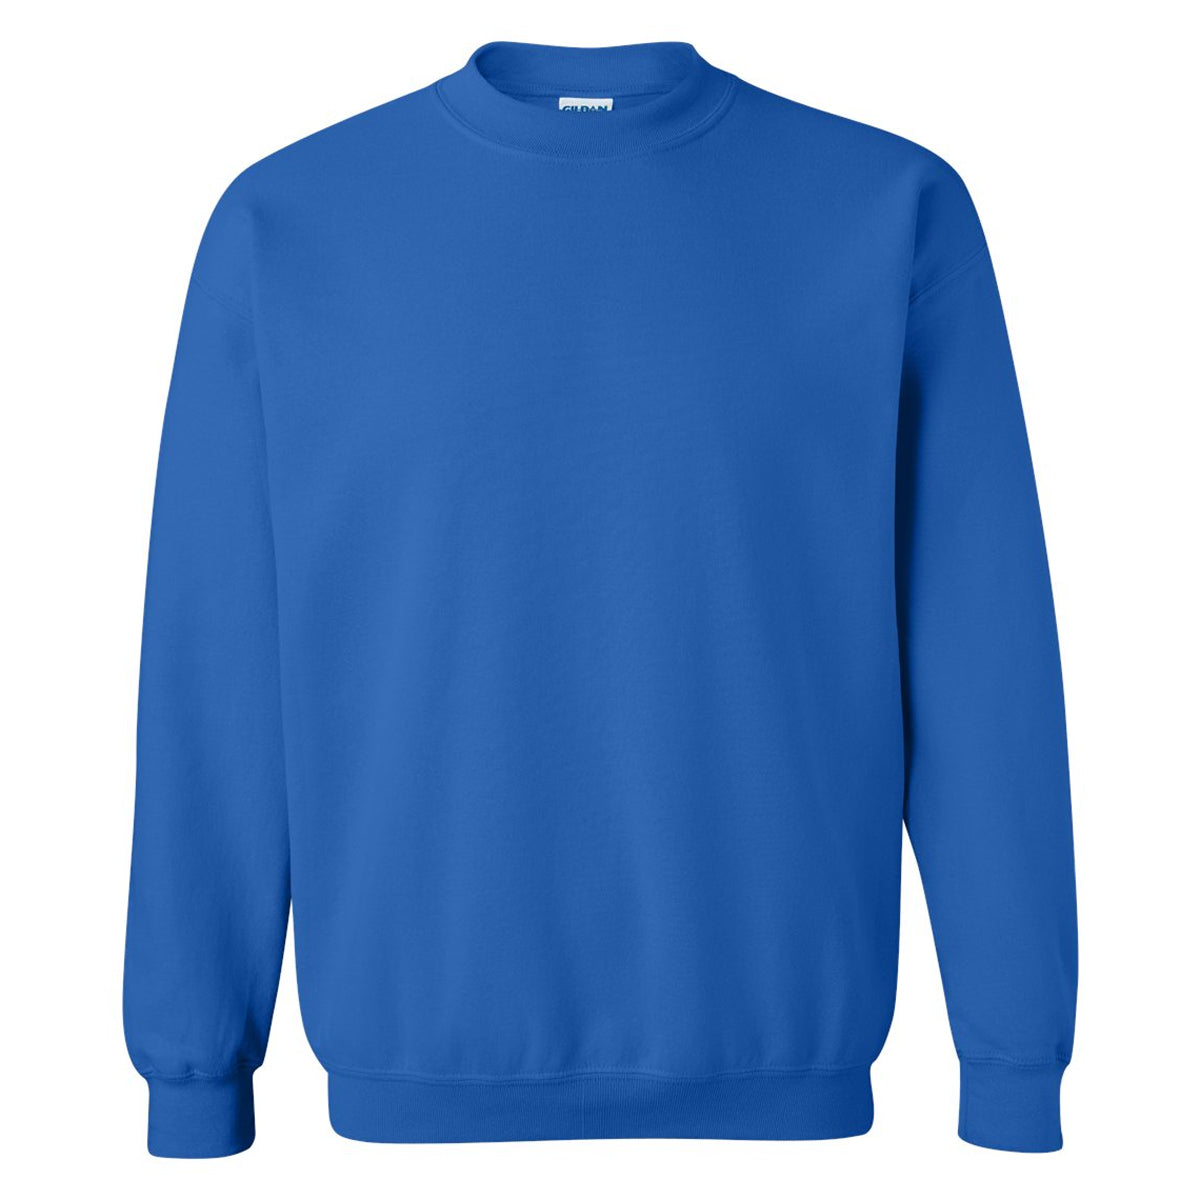 Windsor - Knights Football Stripes - Royal (Tee/DriFit/Hoodie/Sweatshirt) - Southern Grace Creations